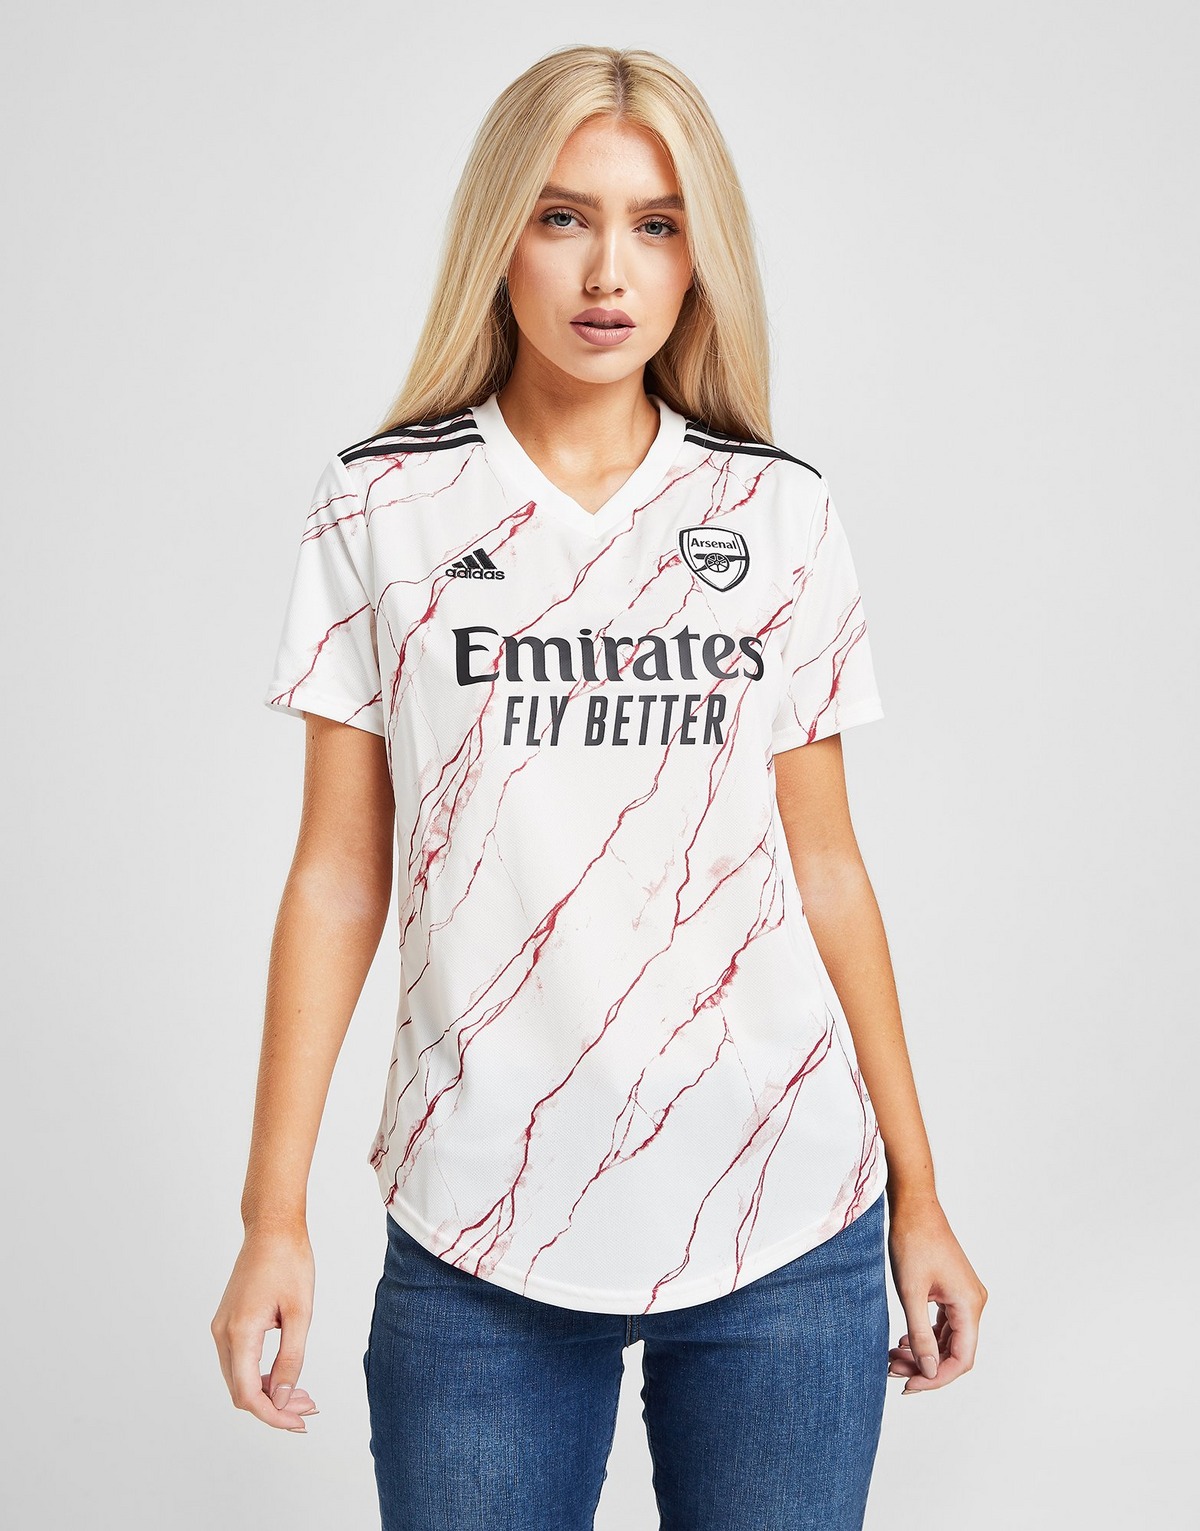 Camiseta Arsenal FC 2ª Equipación 2020-2021 Mujer